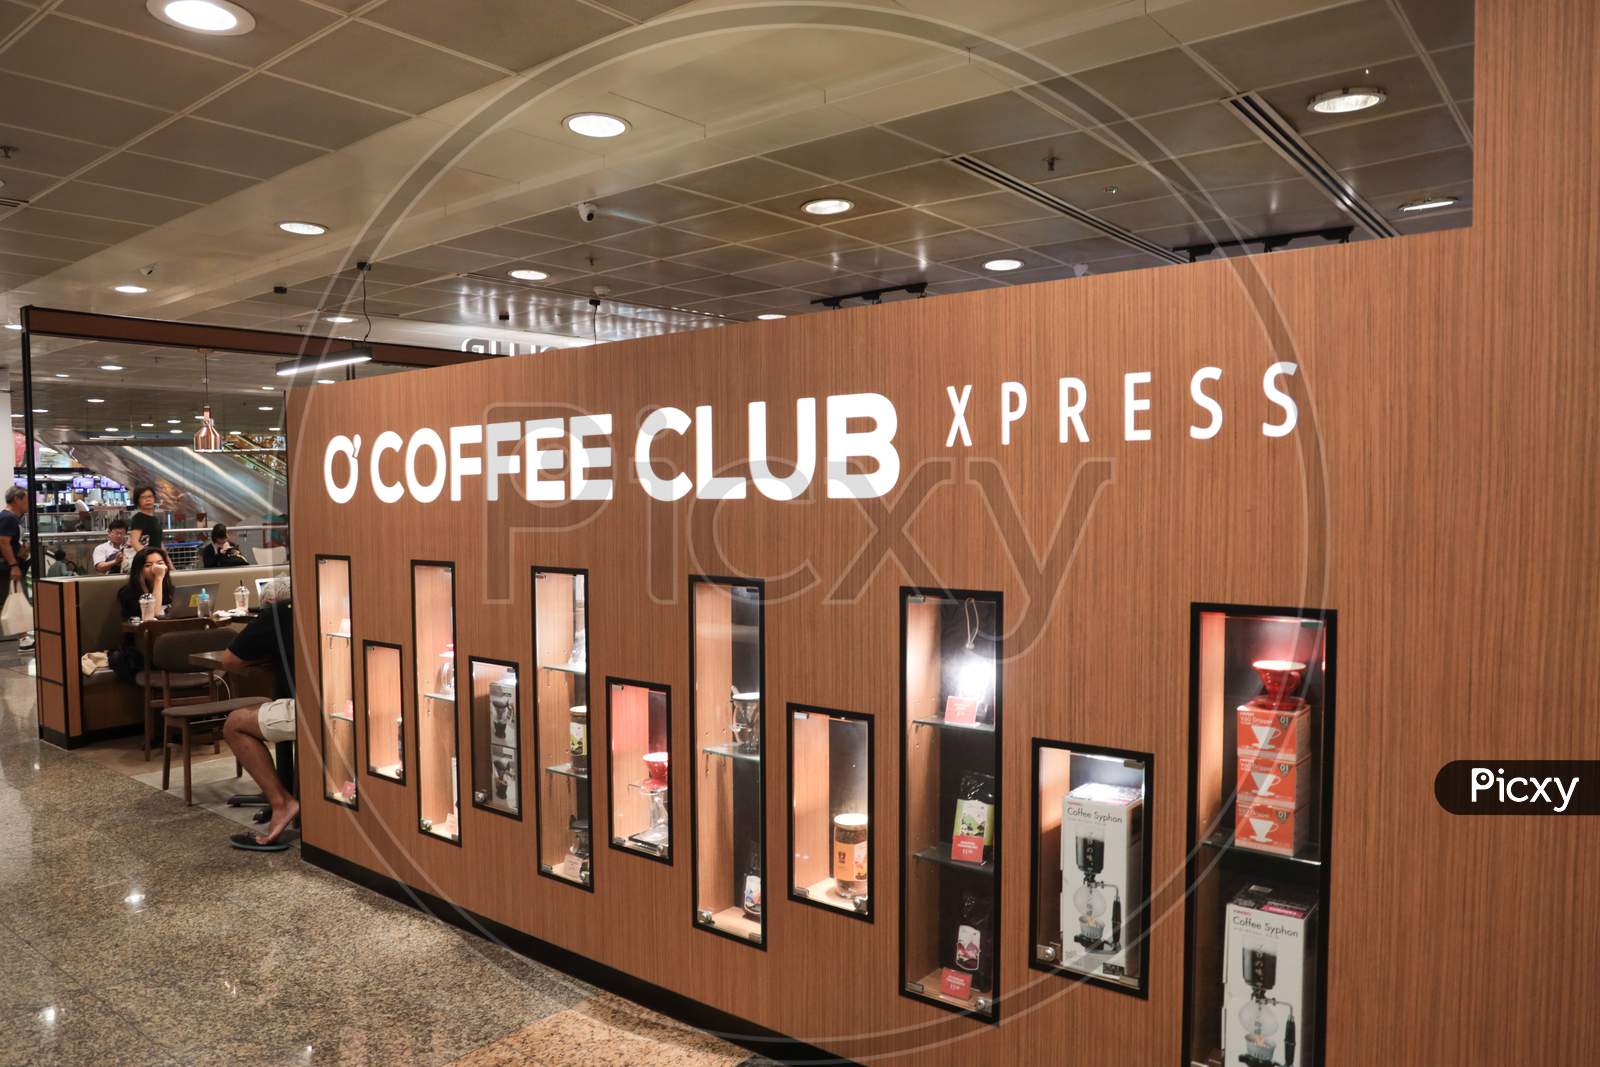 O' Coffee Club Xpress  Store At Changi Airport, Singapore